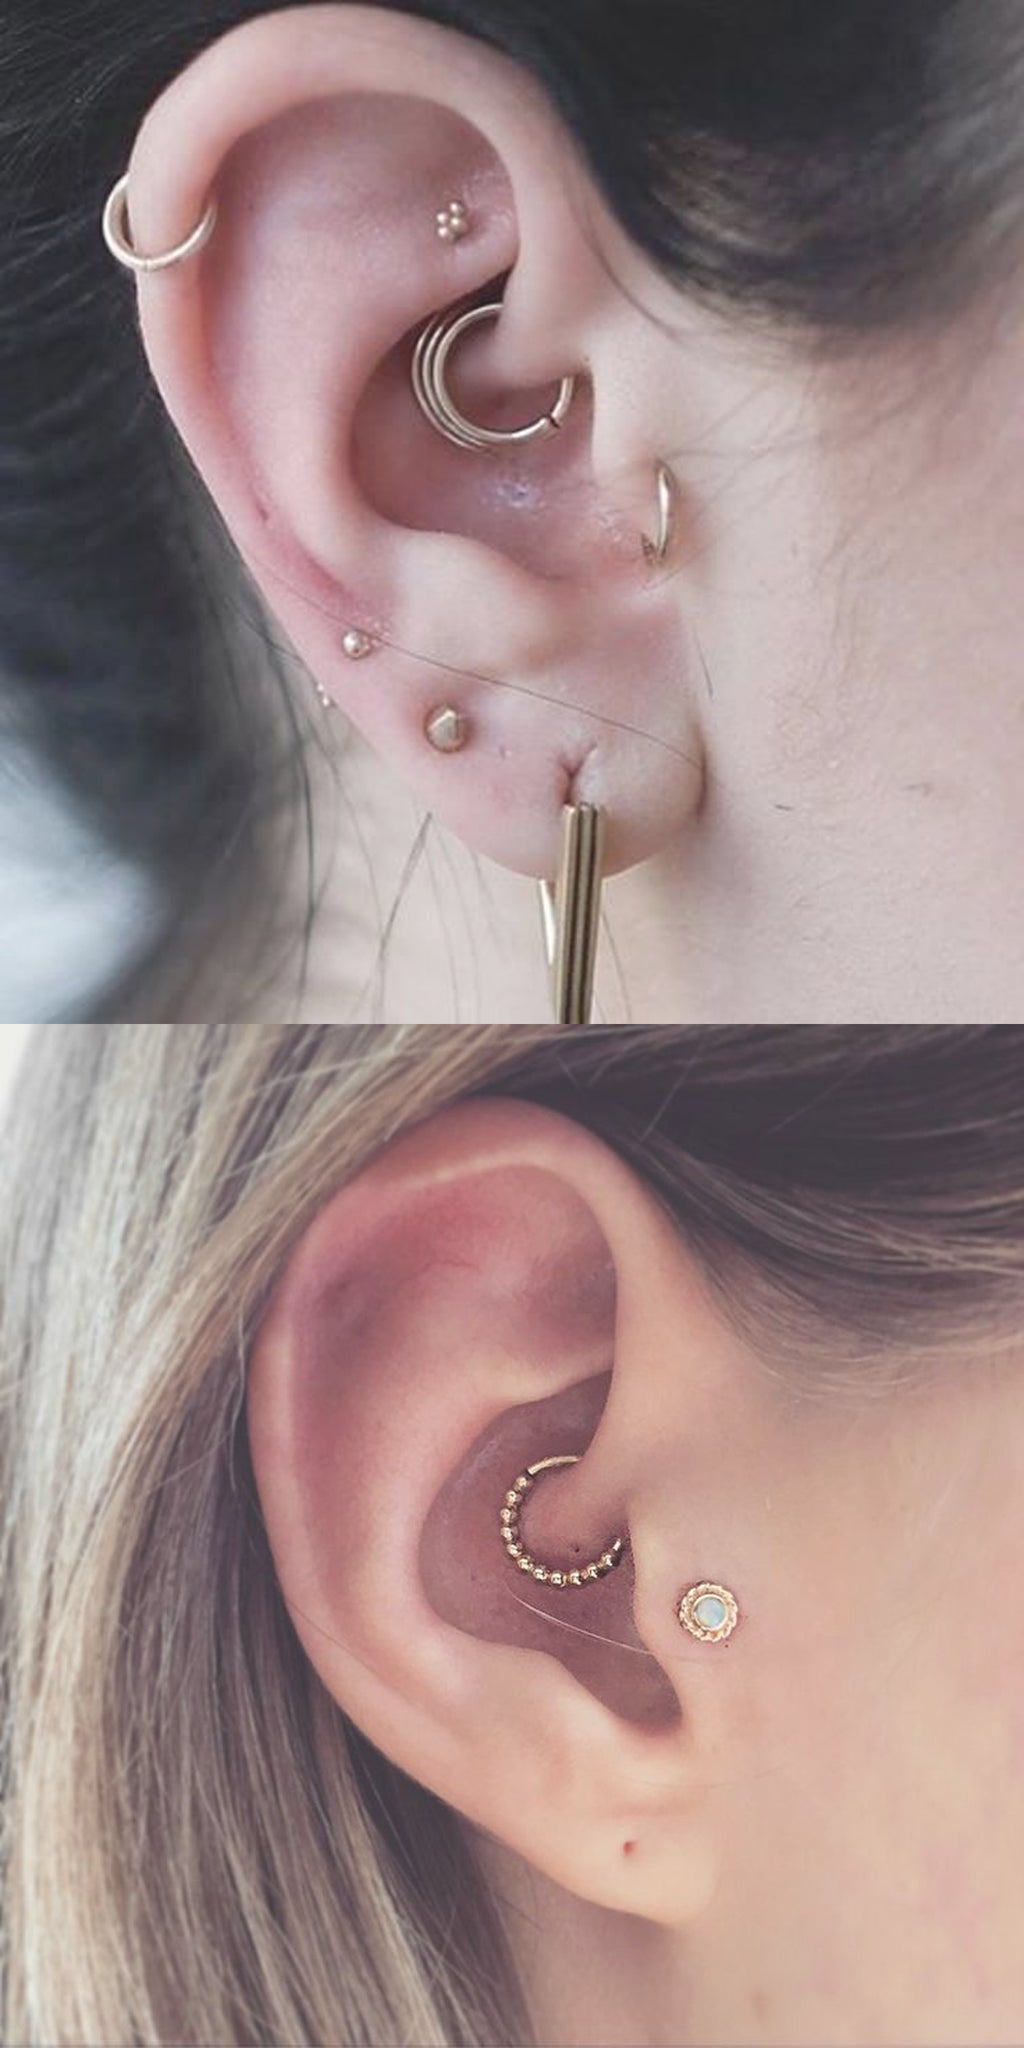 Elegant Multiple Ear Piercing Jewelry at MyBodiArt.com - Gold Daith Ring - Tragus Earring Stud - Single Cartilage Hoop 